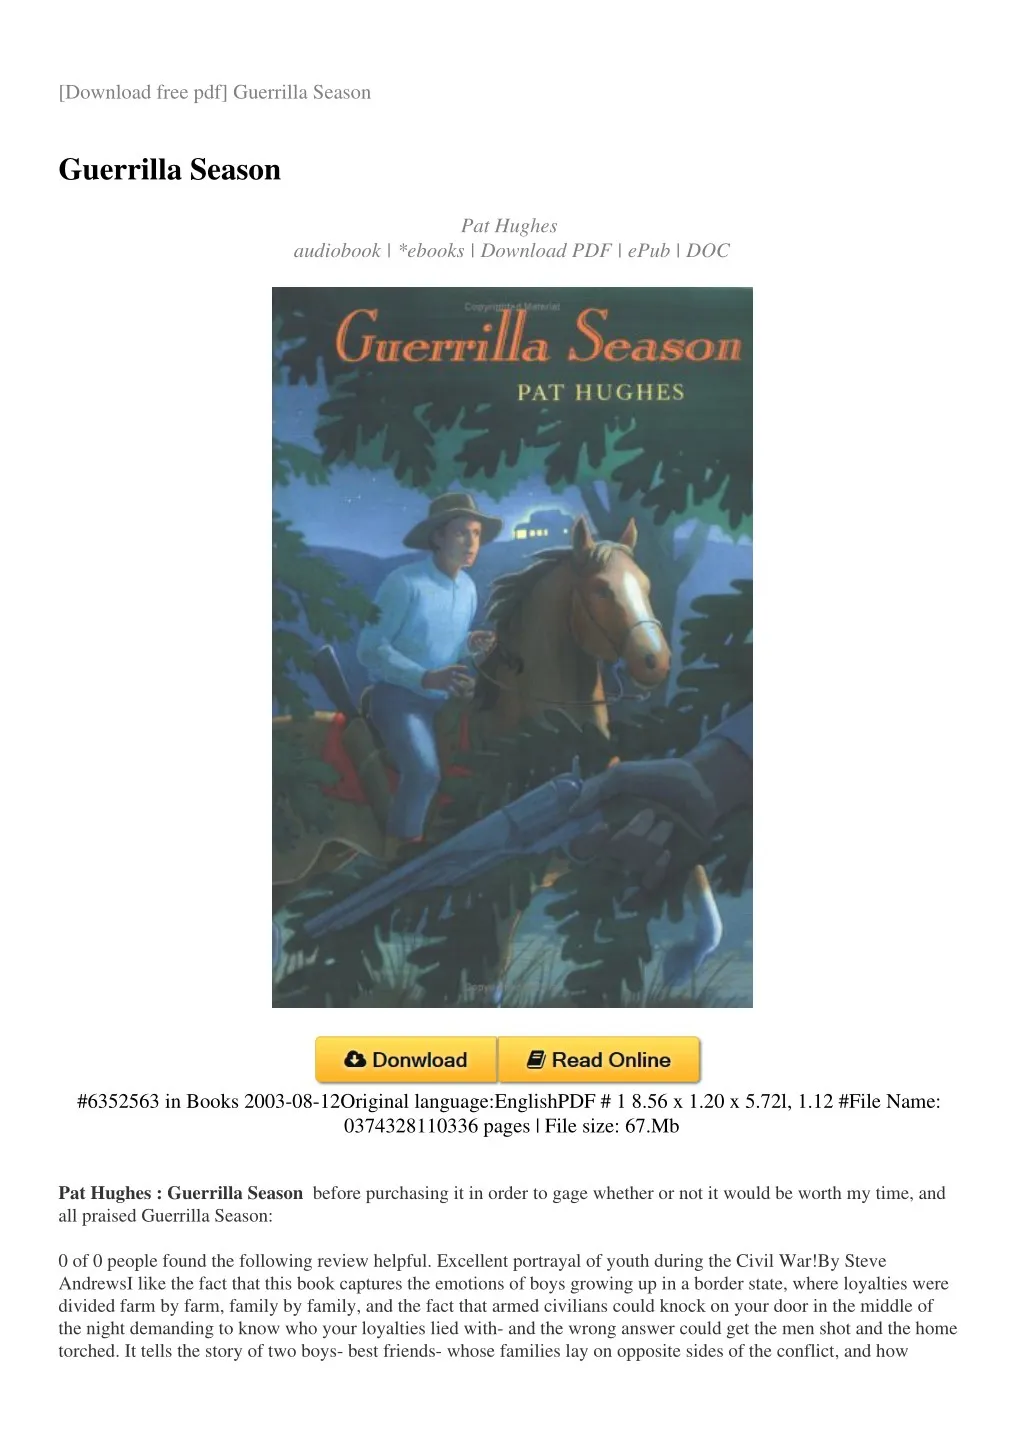 download free pdf guerrilla season